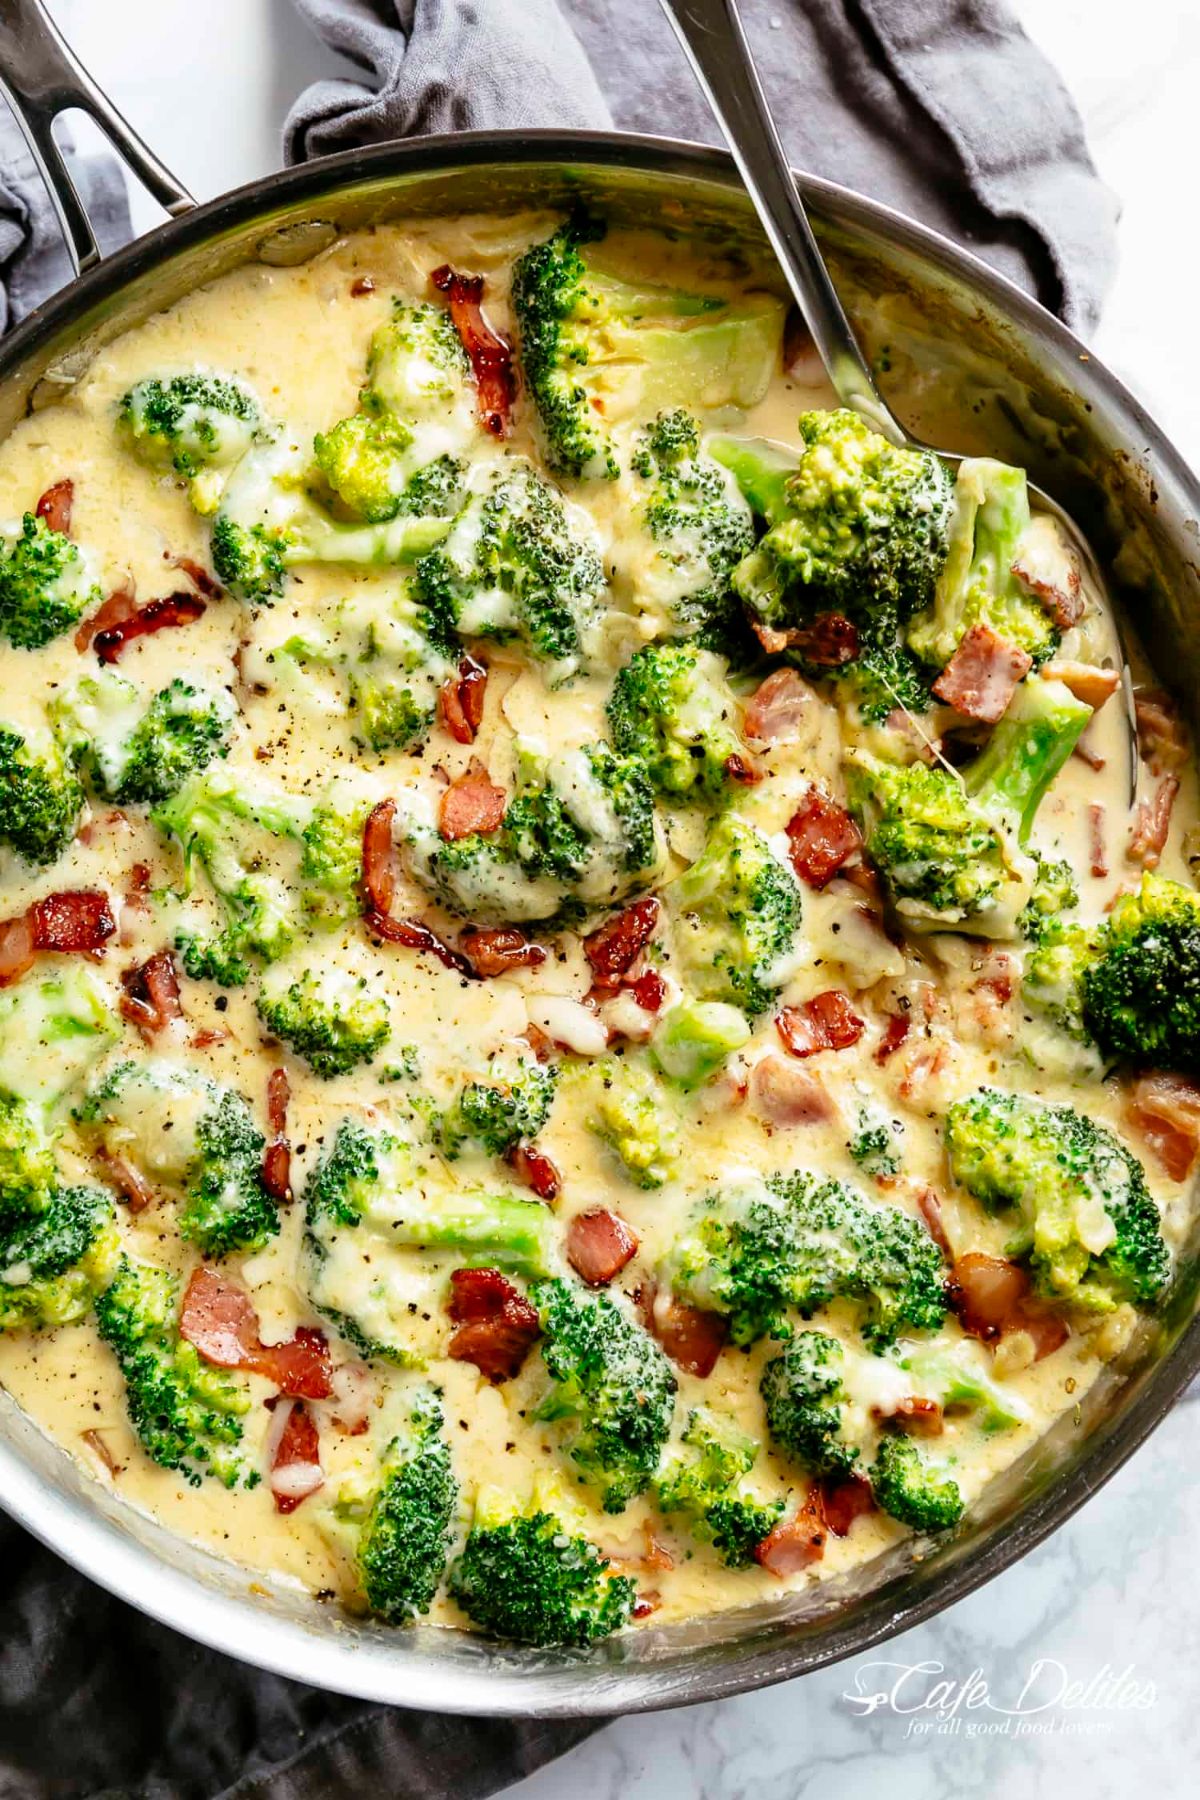 Creamy Garlic Parmesan Broccoli With Bacon in a skillet with a spoon.